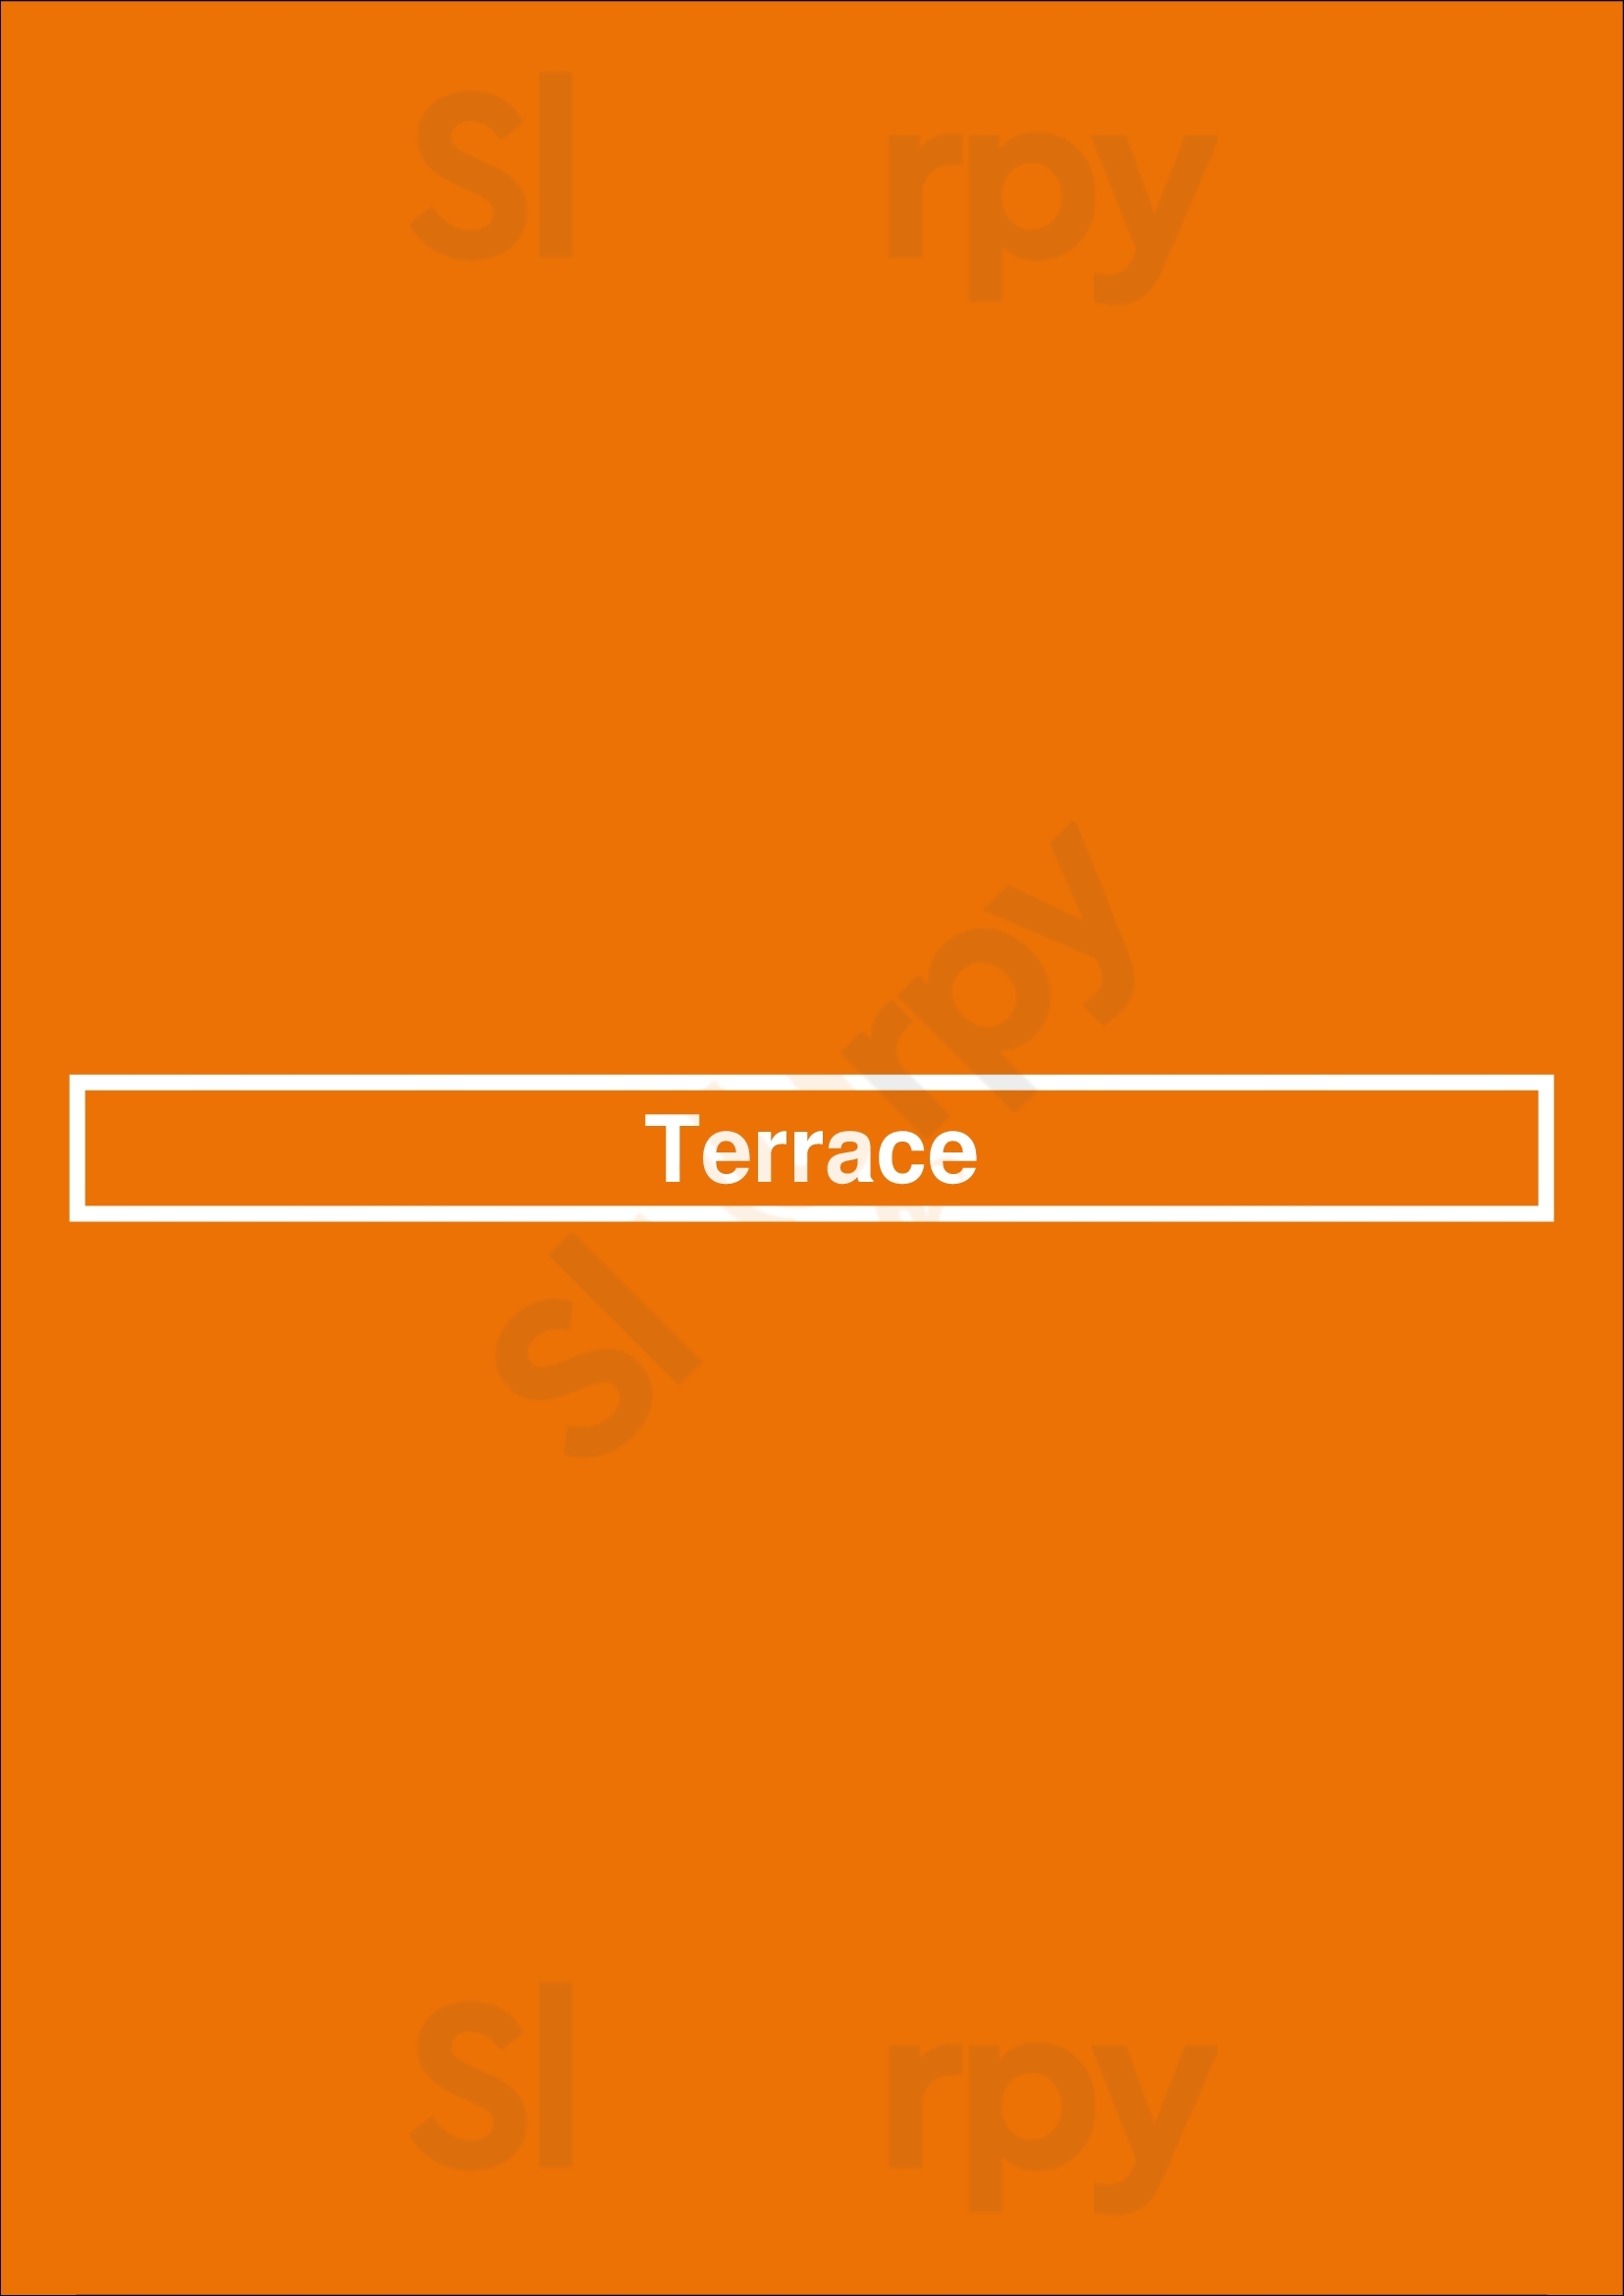 Terrace Colares Menu - 1